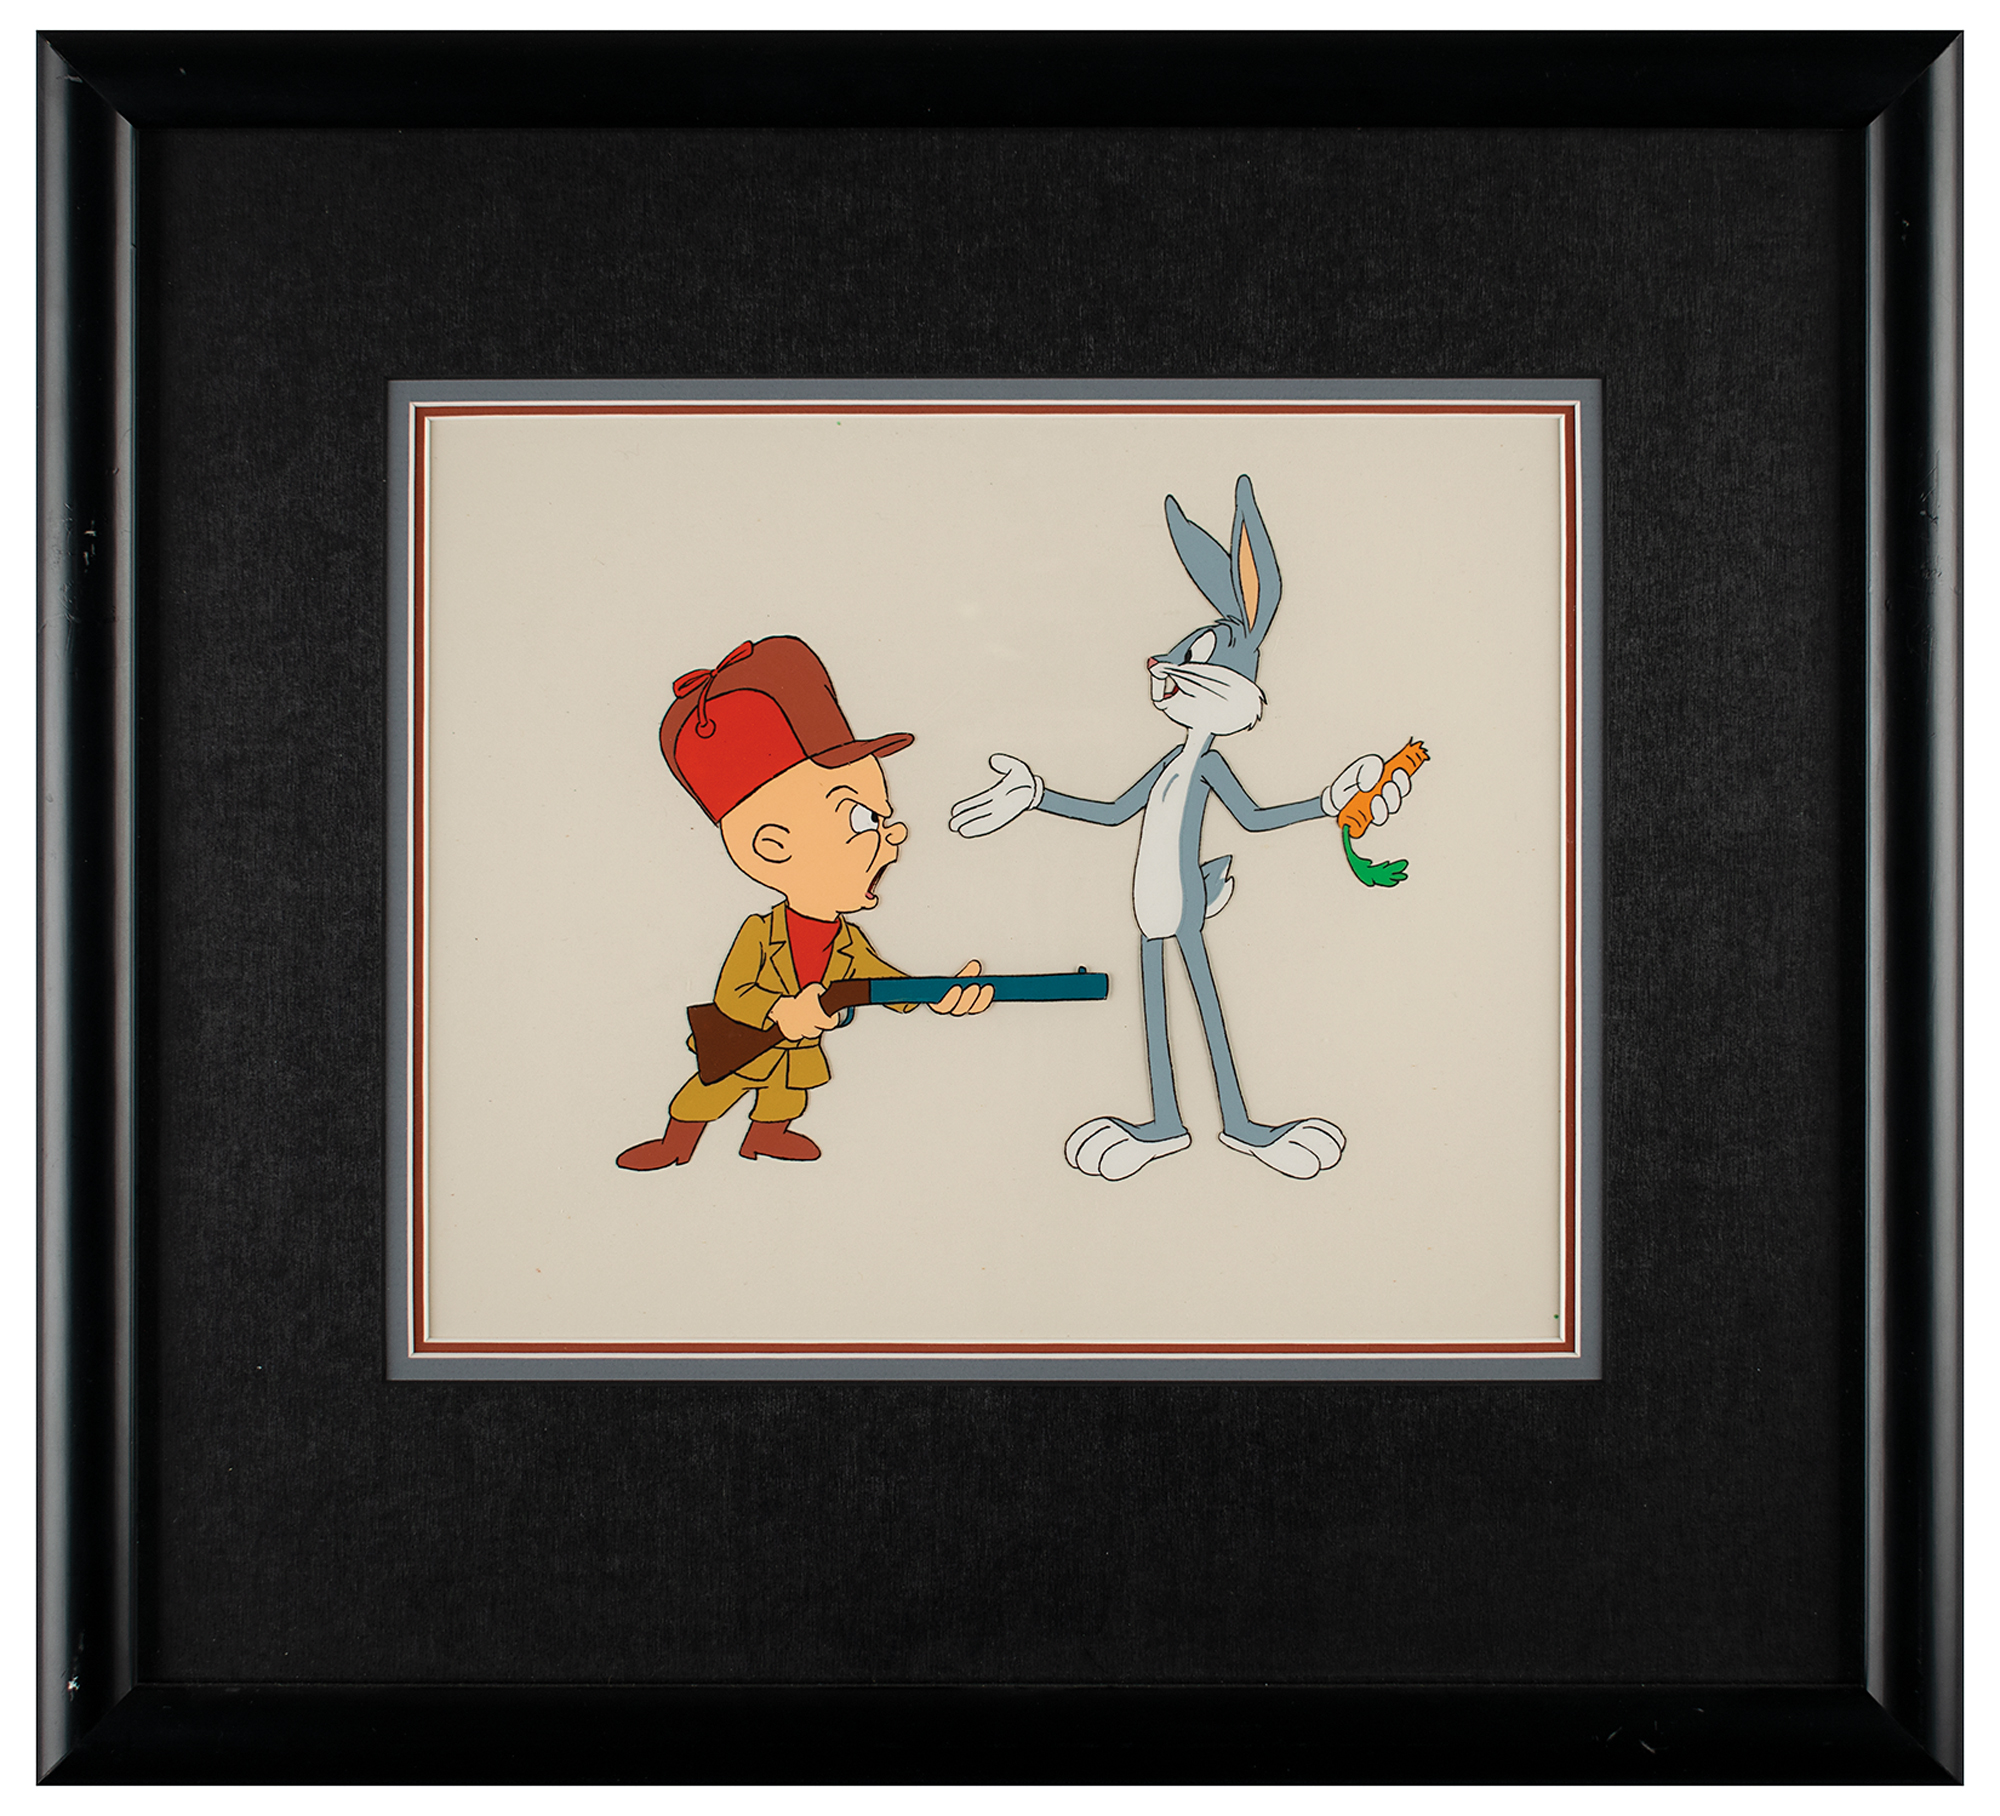 Bugs Bunny And Elmer Fudd Production Cel From A Looney Tunes Cartoon